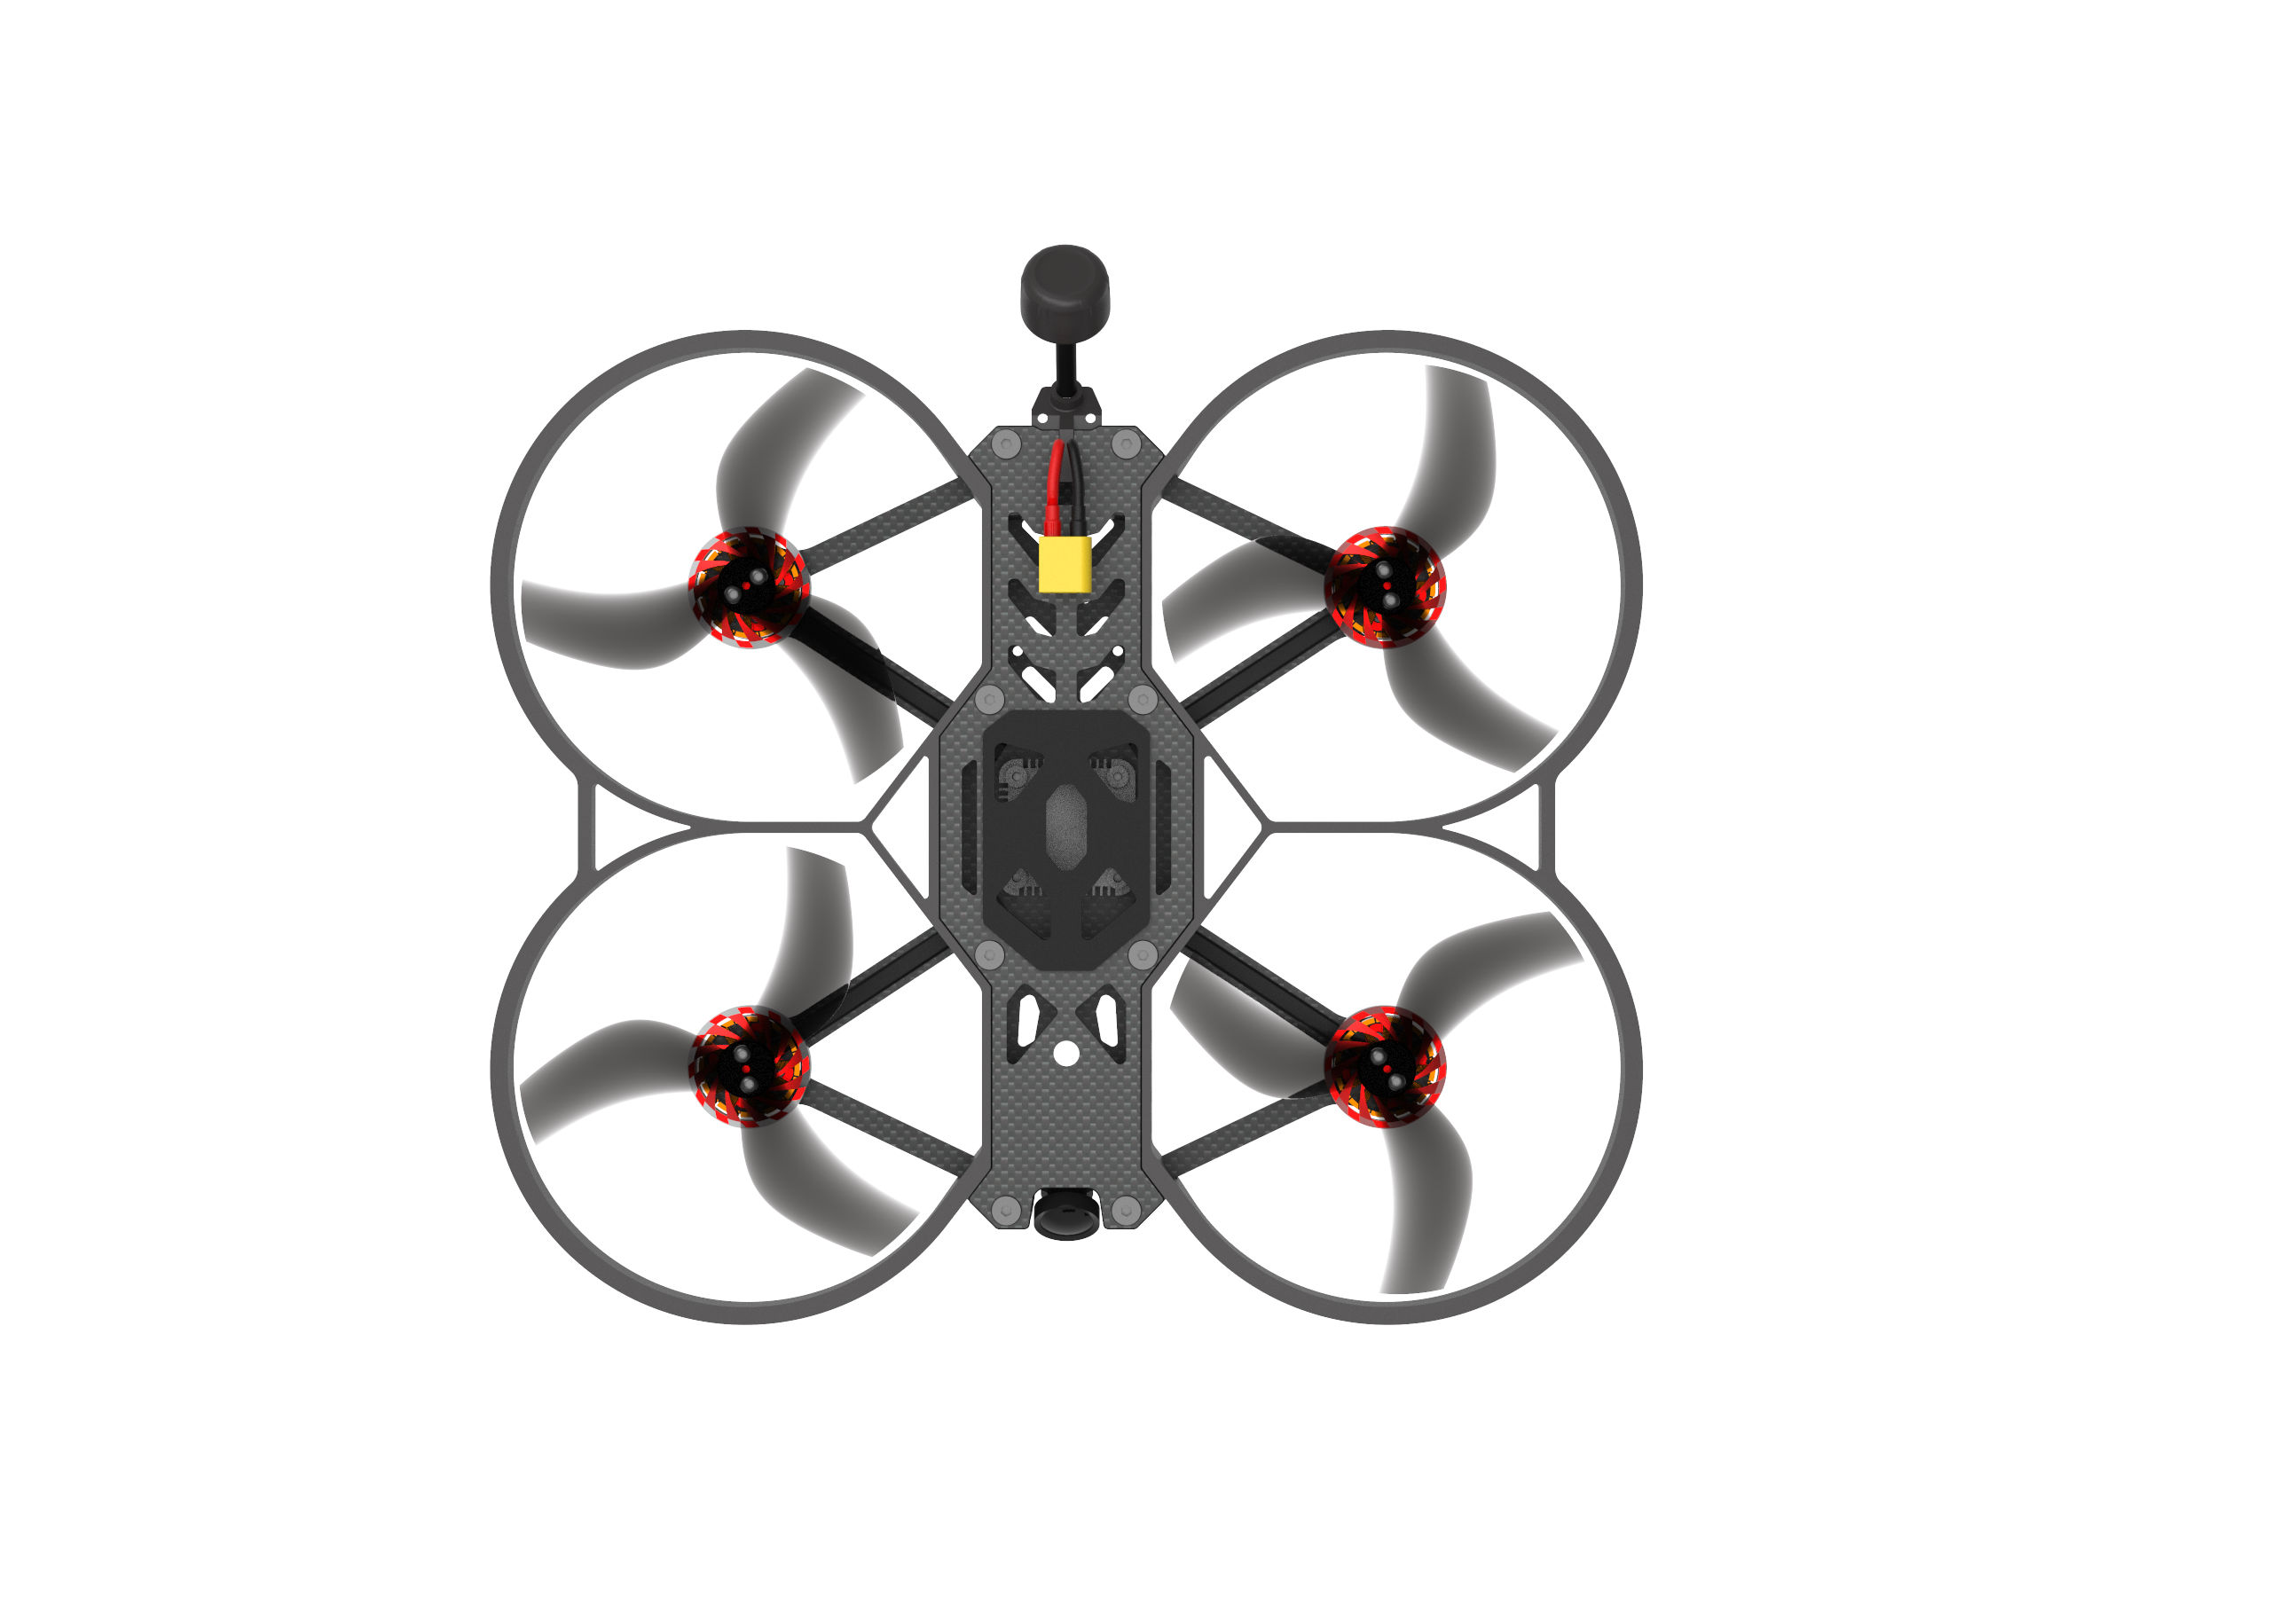 Seagull FPV RC Drone